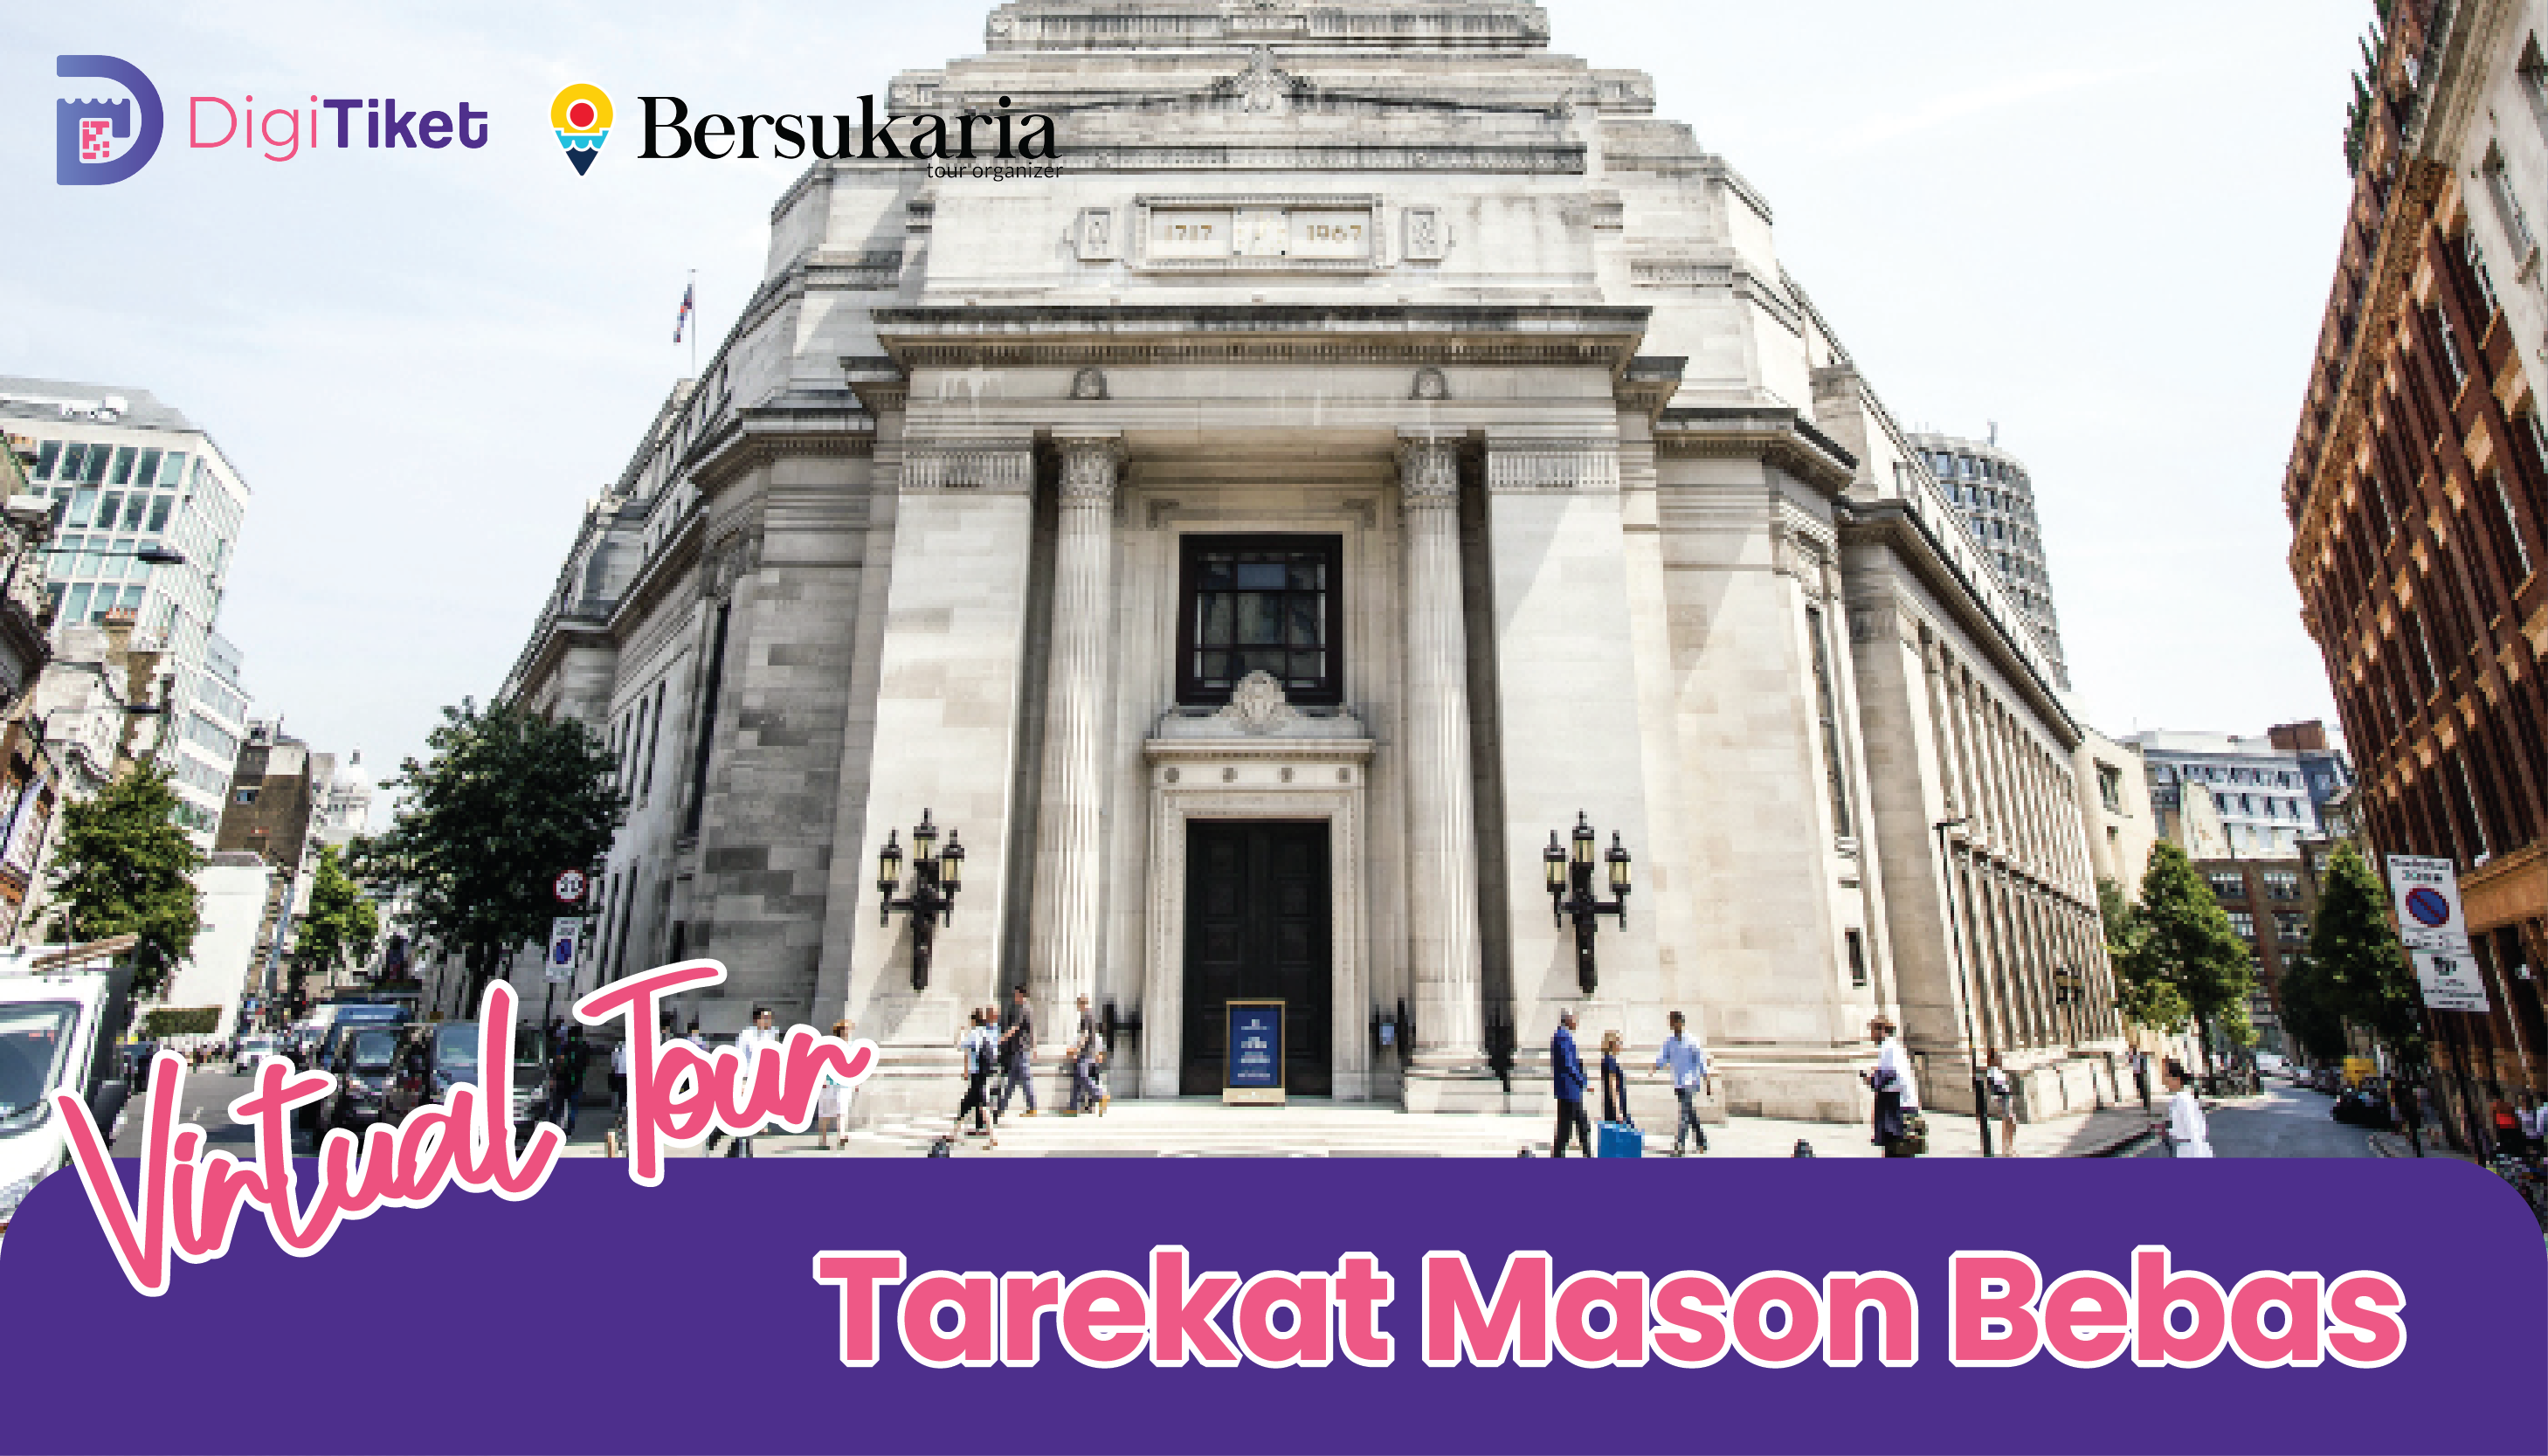 Virtual Tour Tarekat Mason Bebas